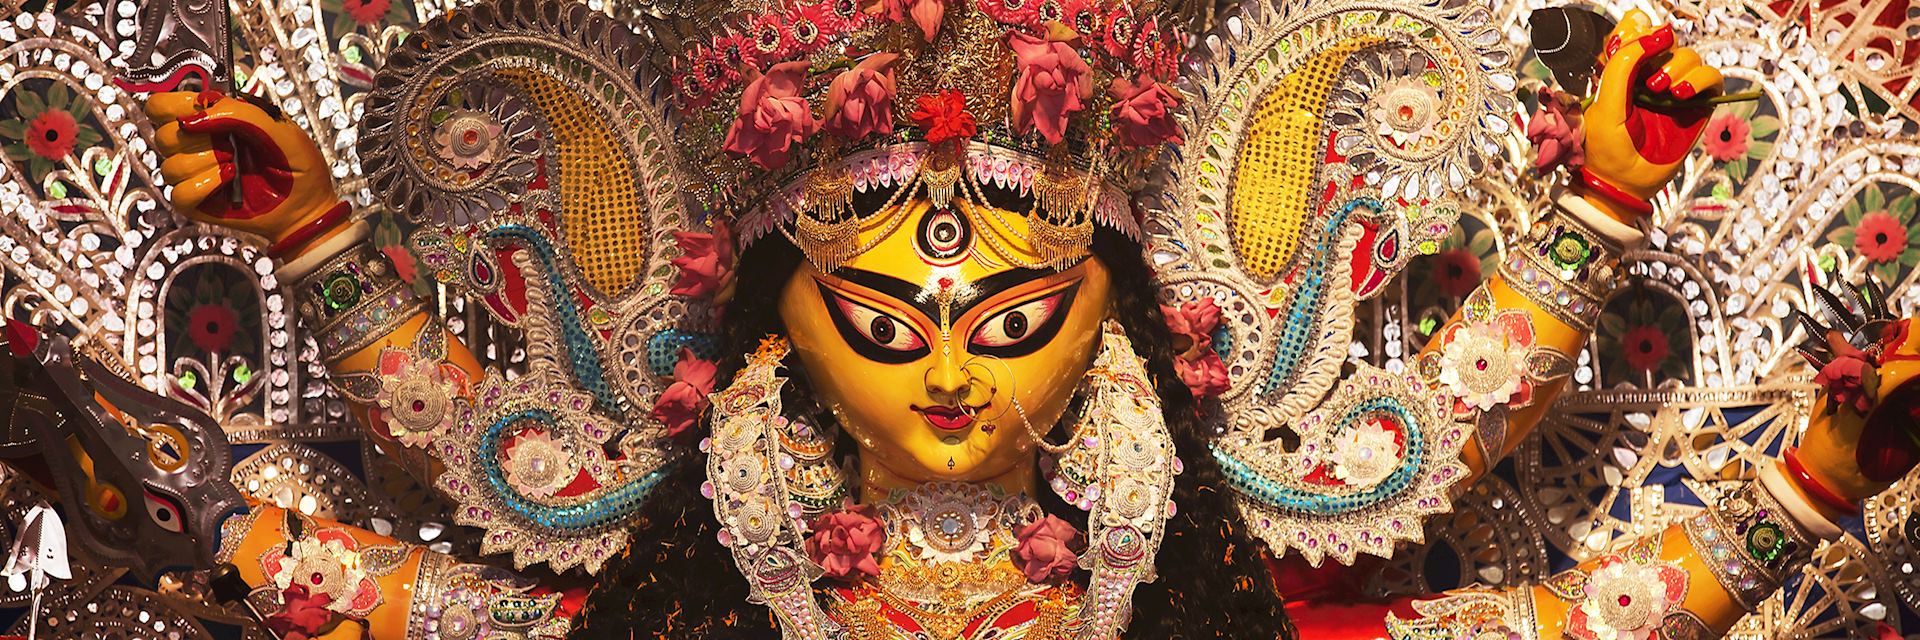 Indian Deity : Goddess during Durga Puja Festival